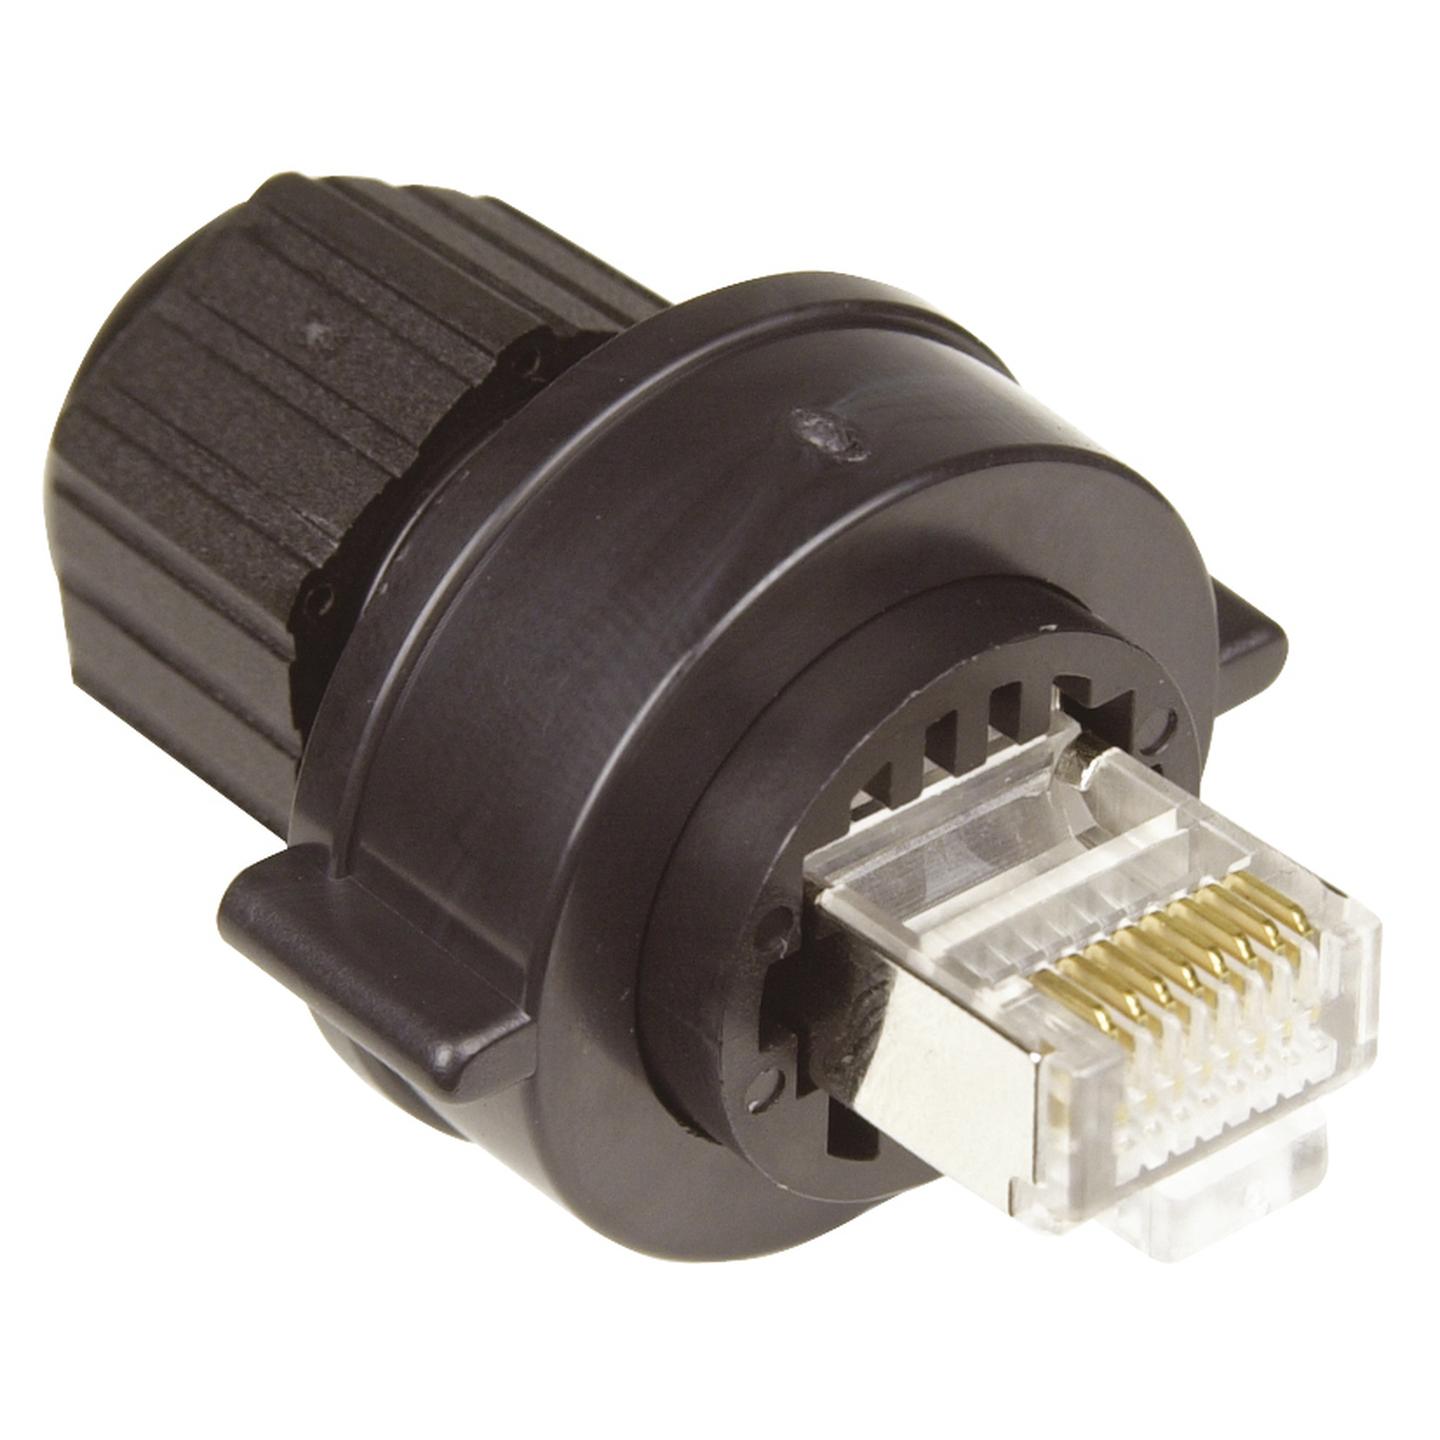 Rugged RJ45 Connectors IP67 Rated Plug